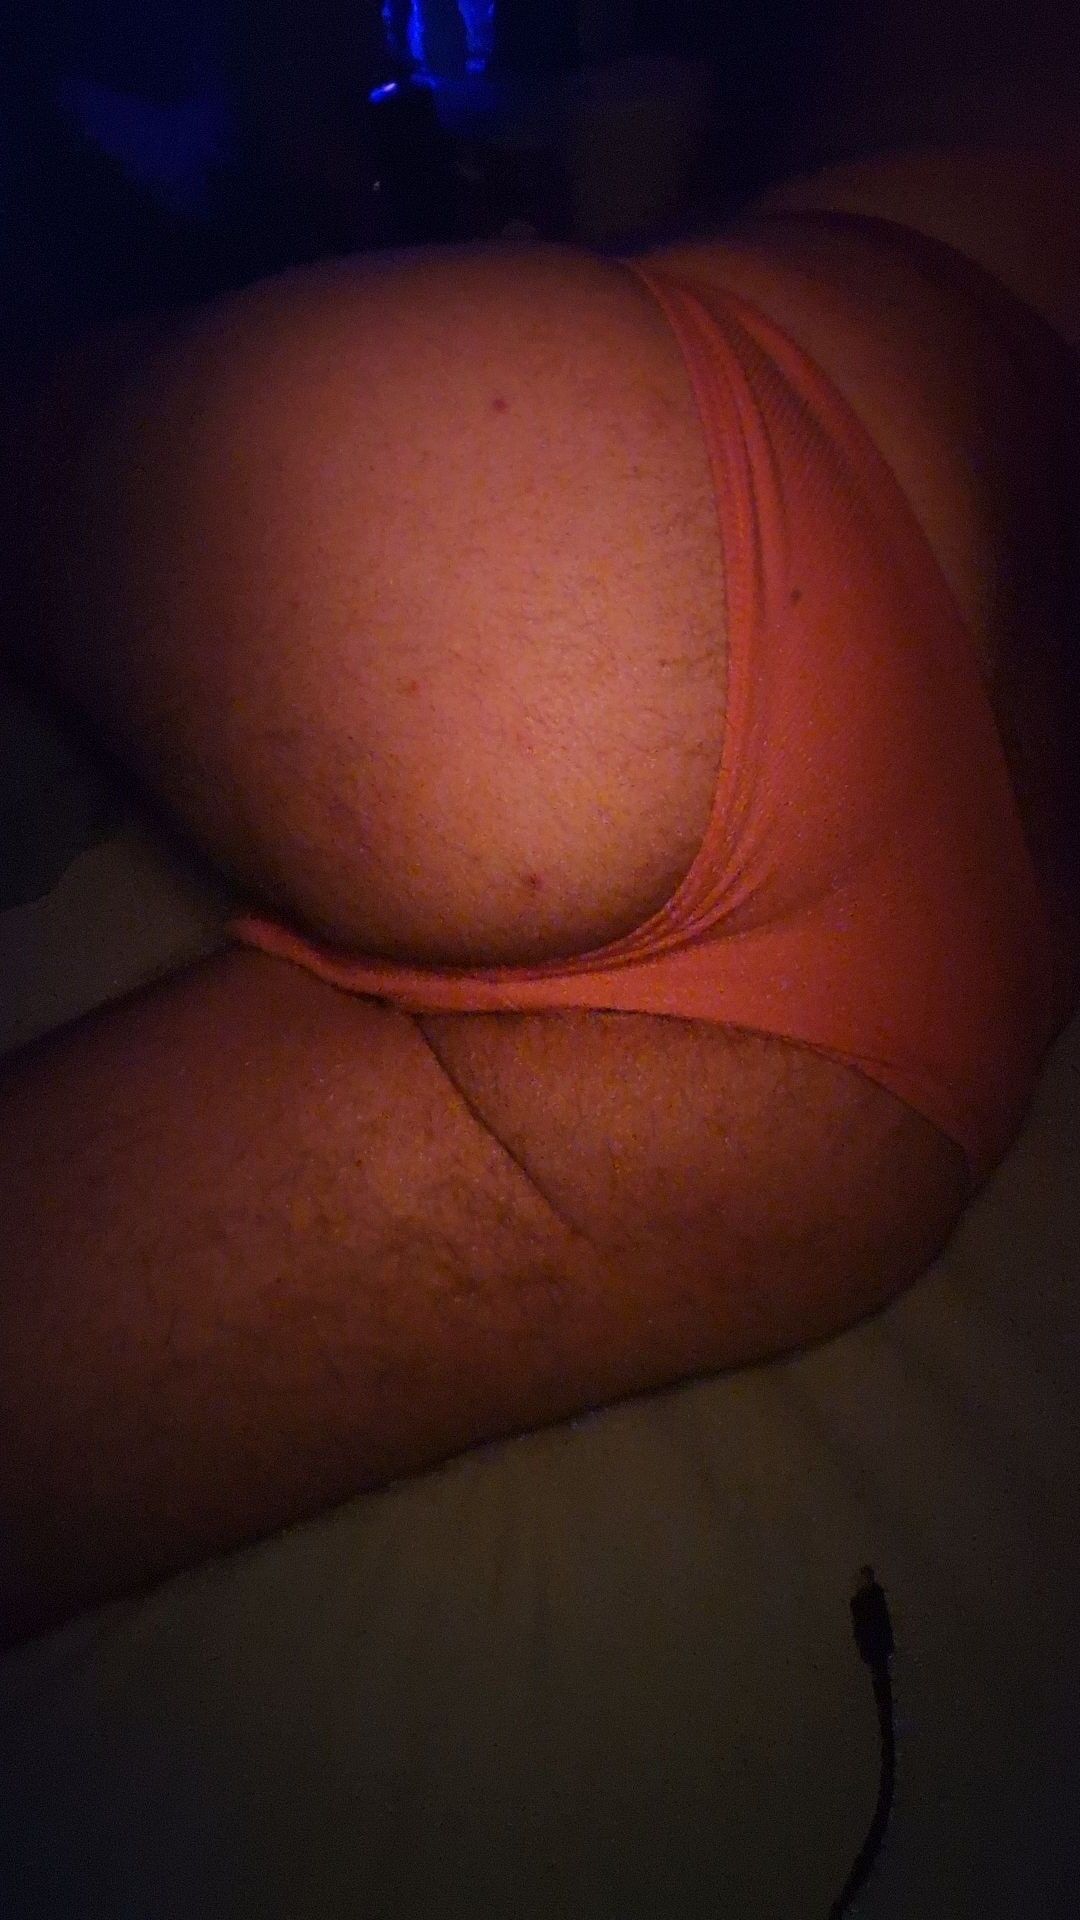 How is my ass? #2